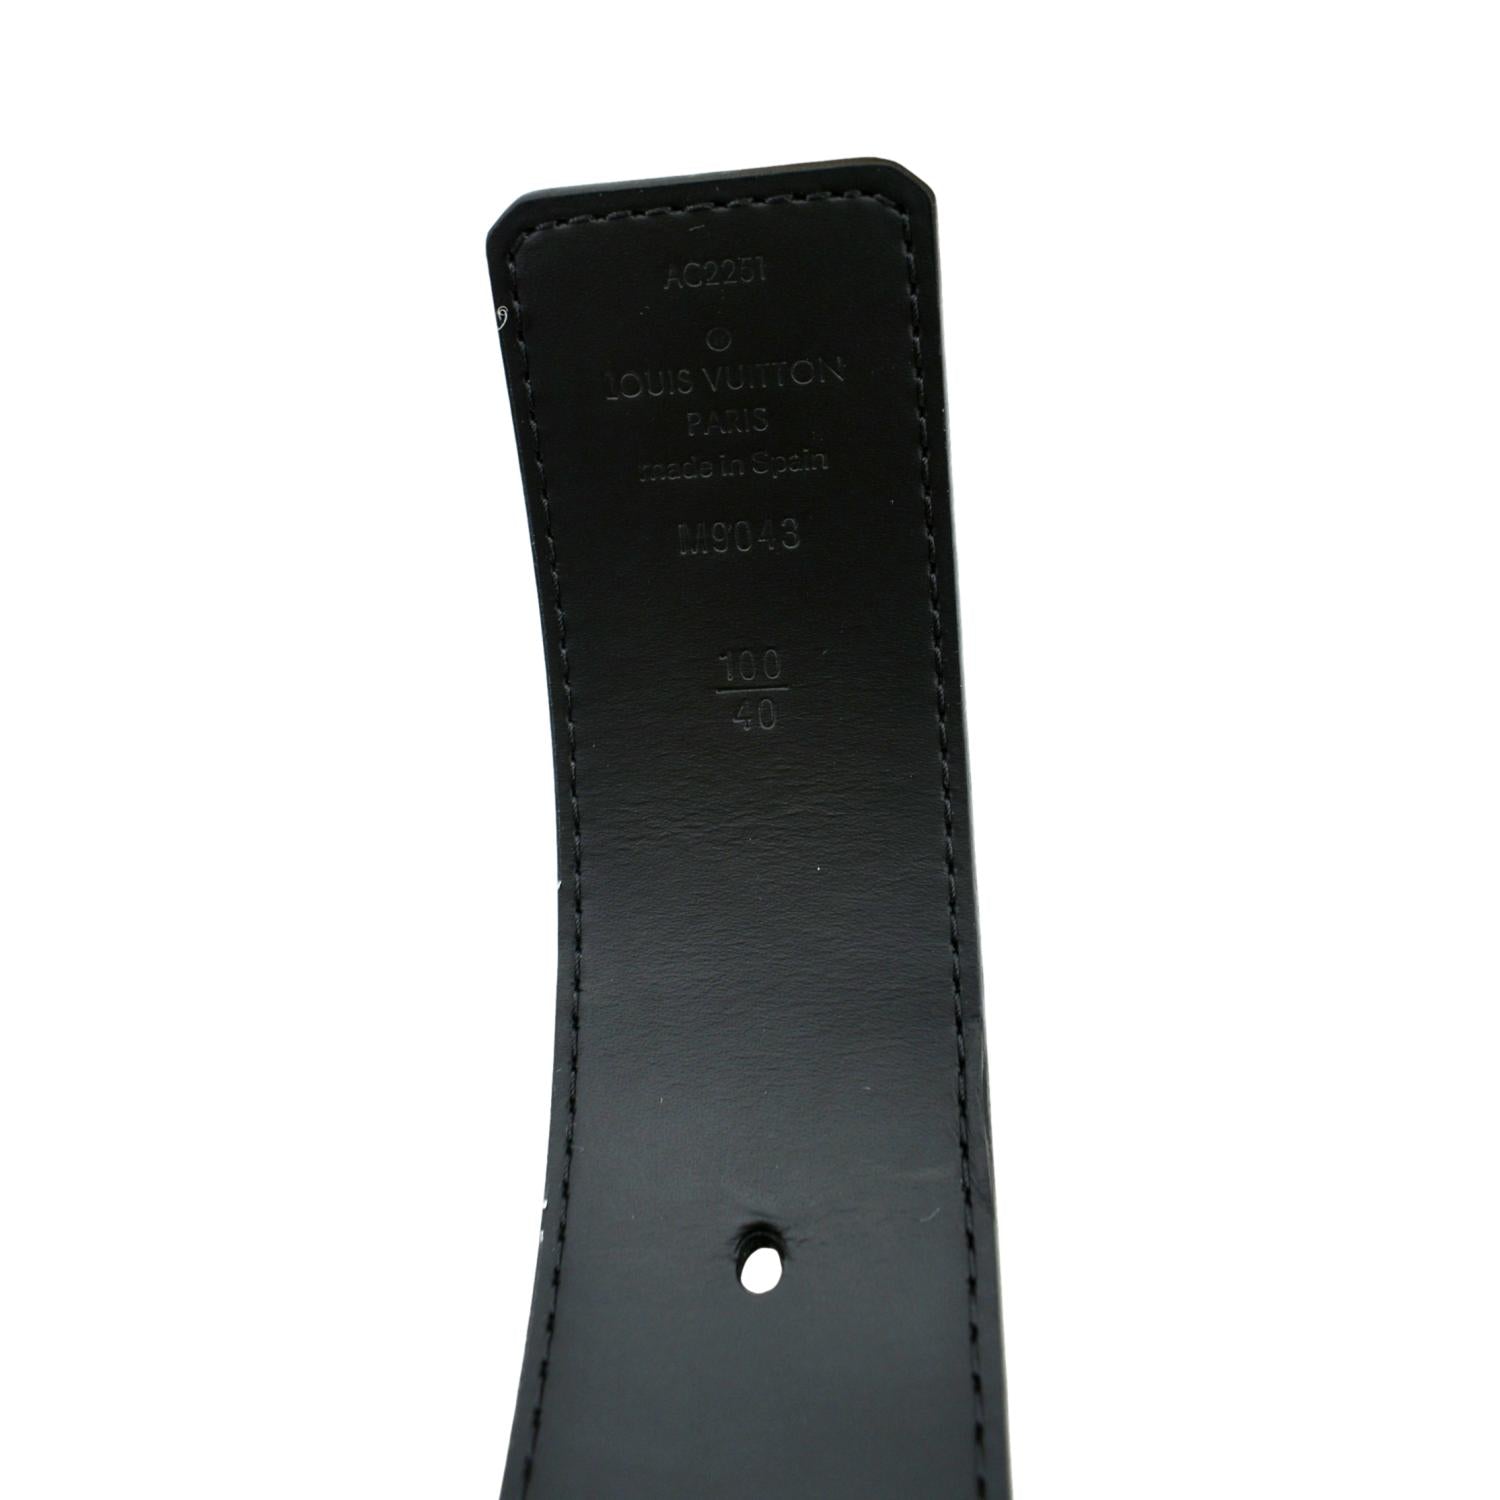 Initiales belt Louis Vuitton Blue size 100 cm in Metal - 33911891